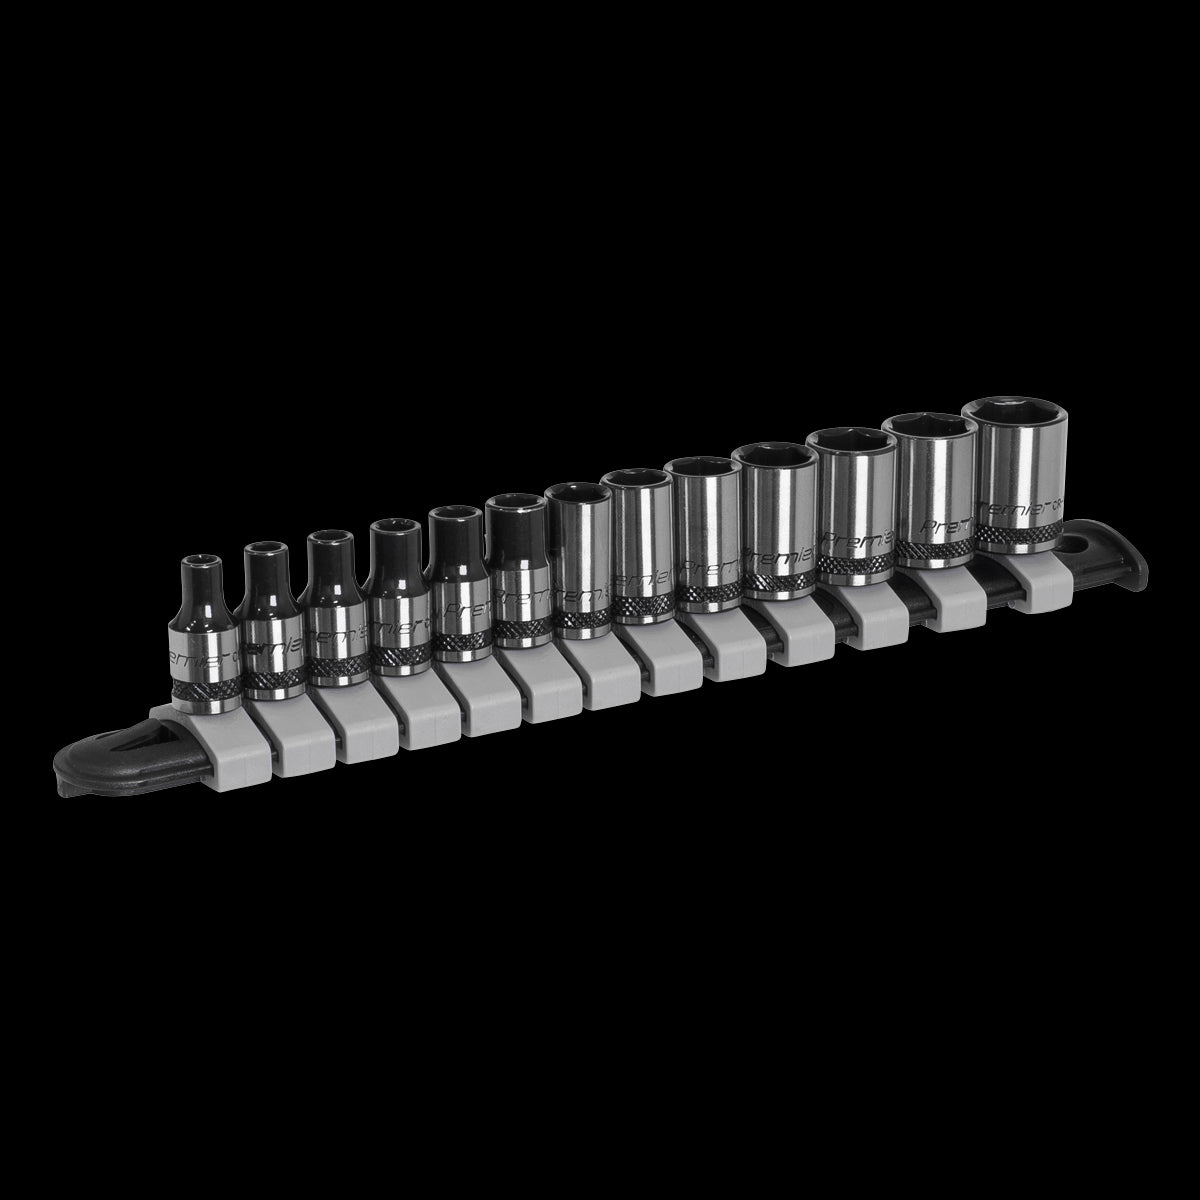 Sealey Premier Socket Set 13pc 1/4"Sq Drive Metric - Black Series